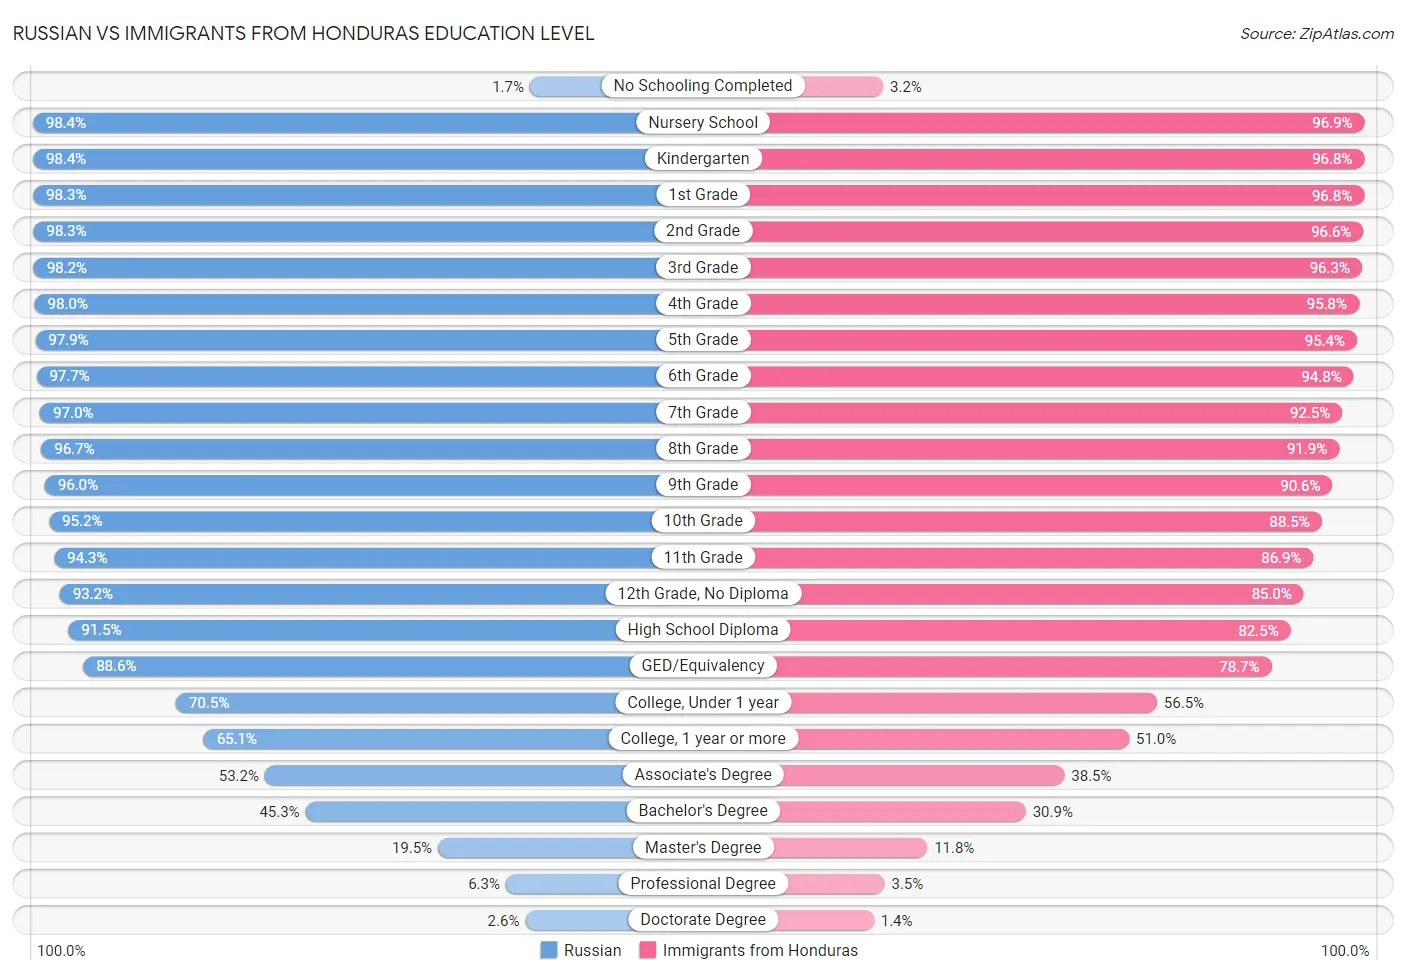 Russian vs Immigrants from Honduras Education Level